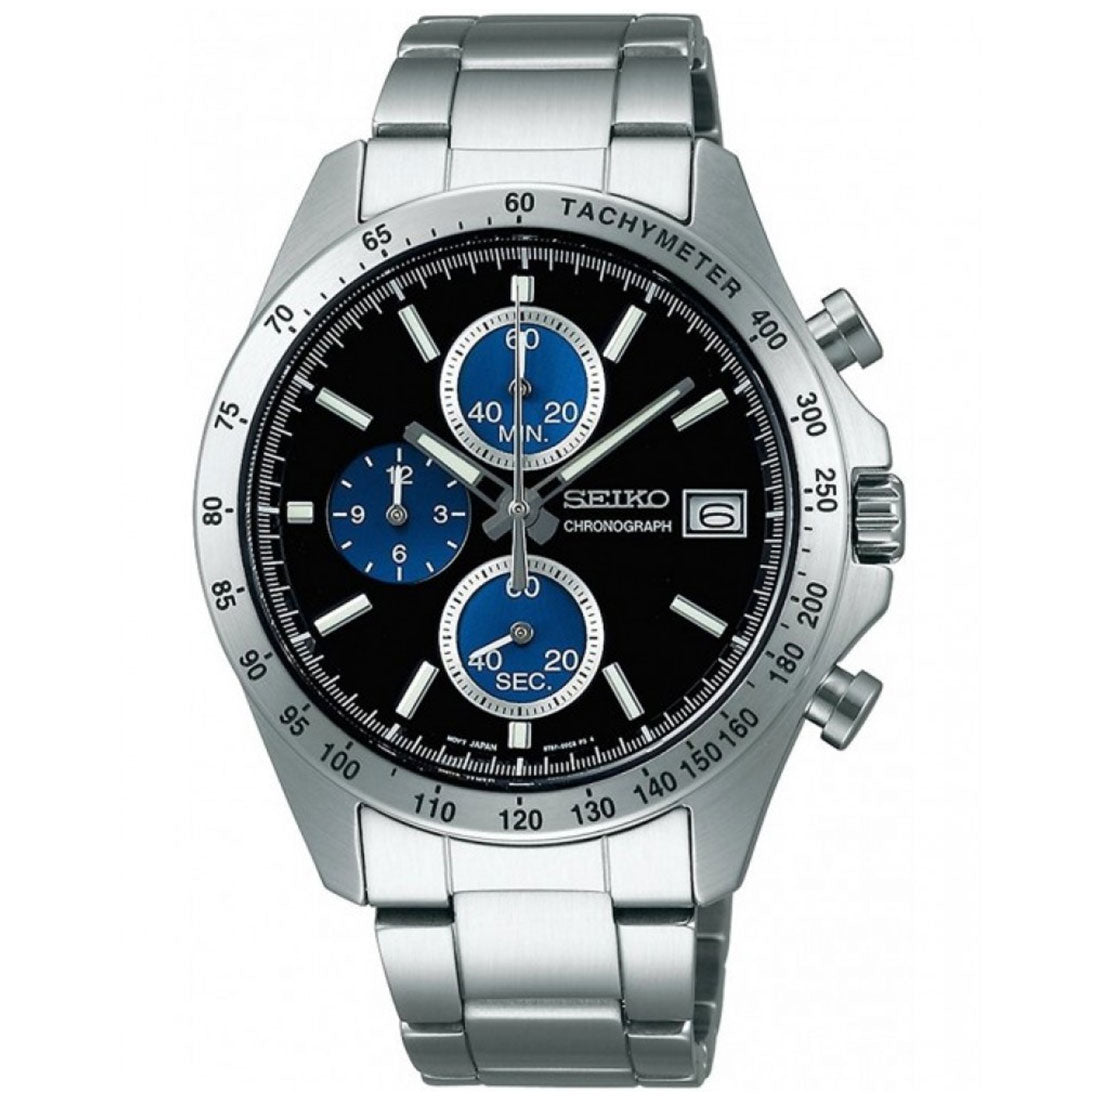 Seiko Spirit SBTR003 JDM Selection Black Blue Dial Chronograph Quartz Stainless Steel Watch